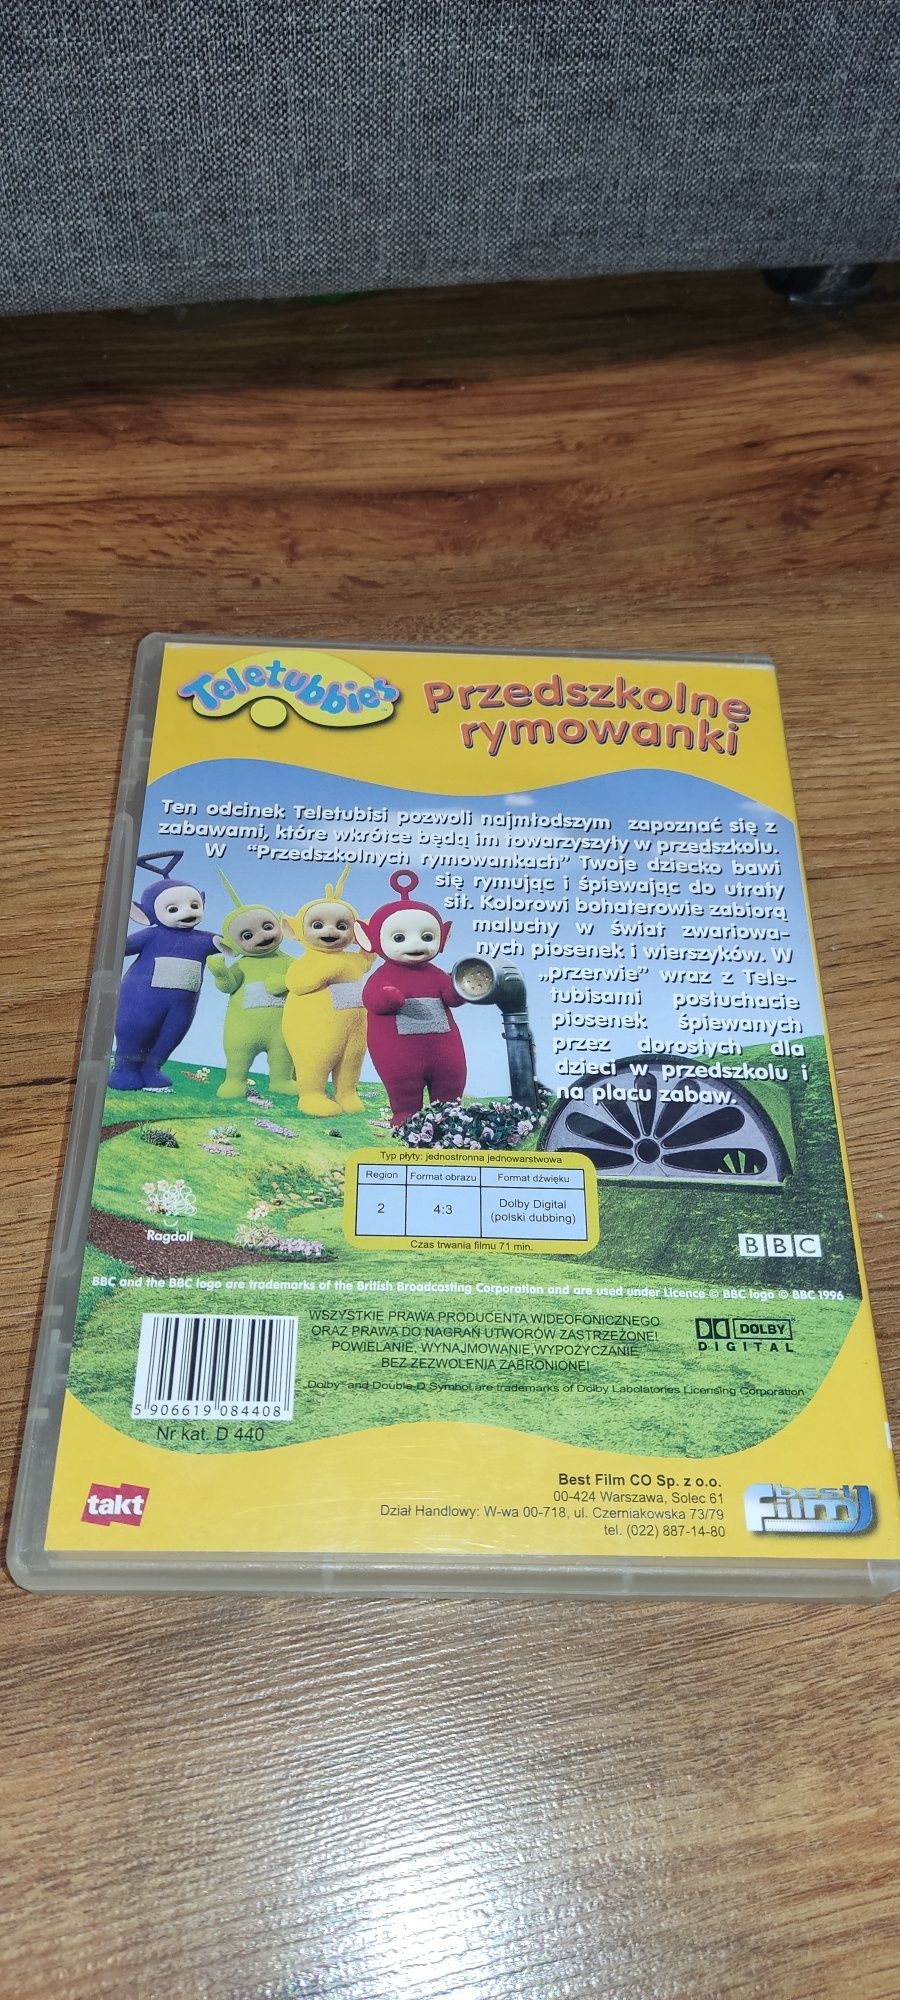 Teletubbies Teletubisie Płyta DVD Przedszkolne rymowanki